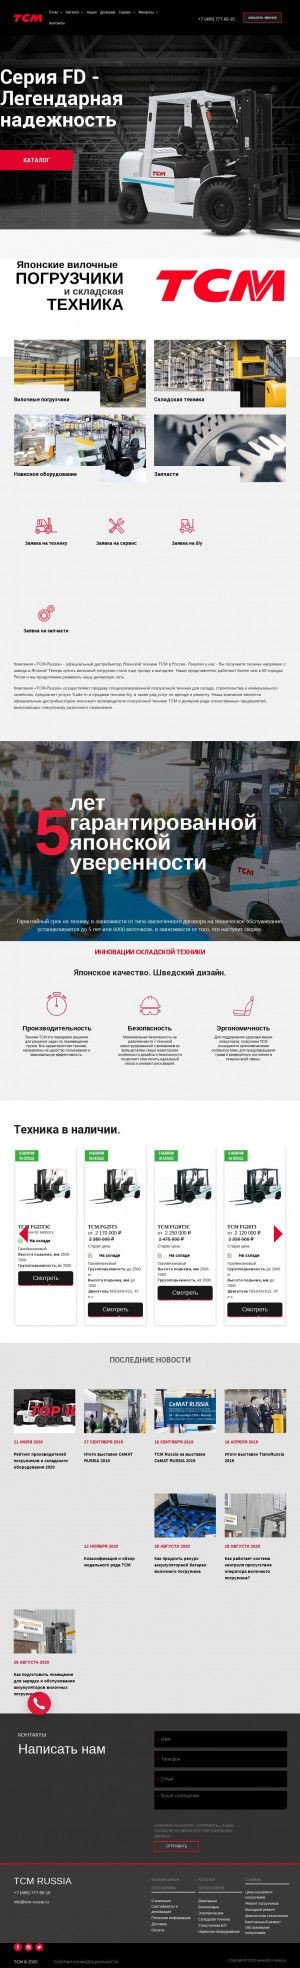 Предпросмотр для www.tcm-russia.ru — Великан